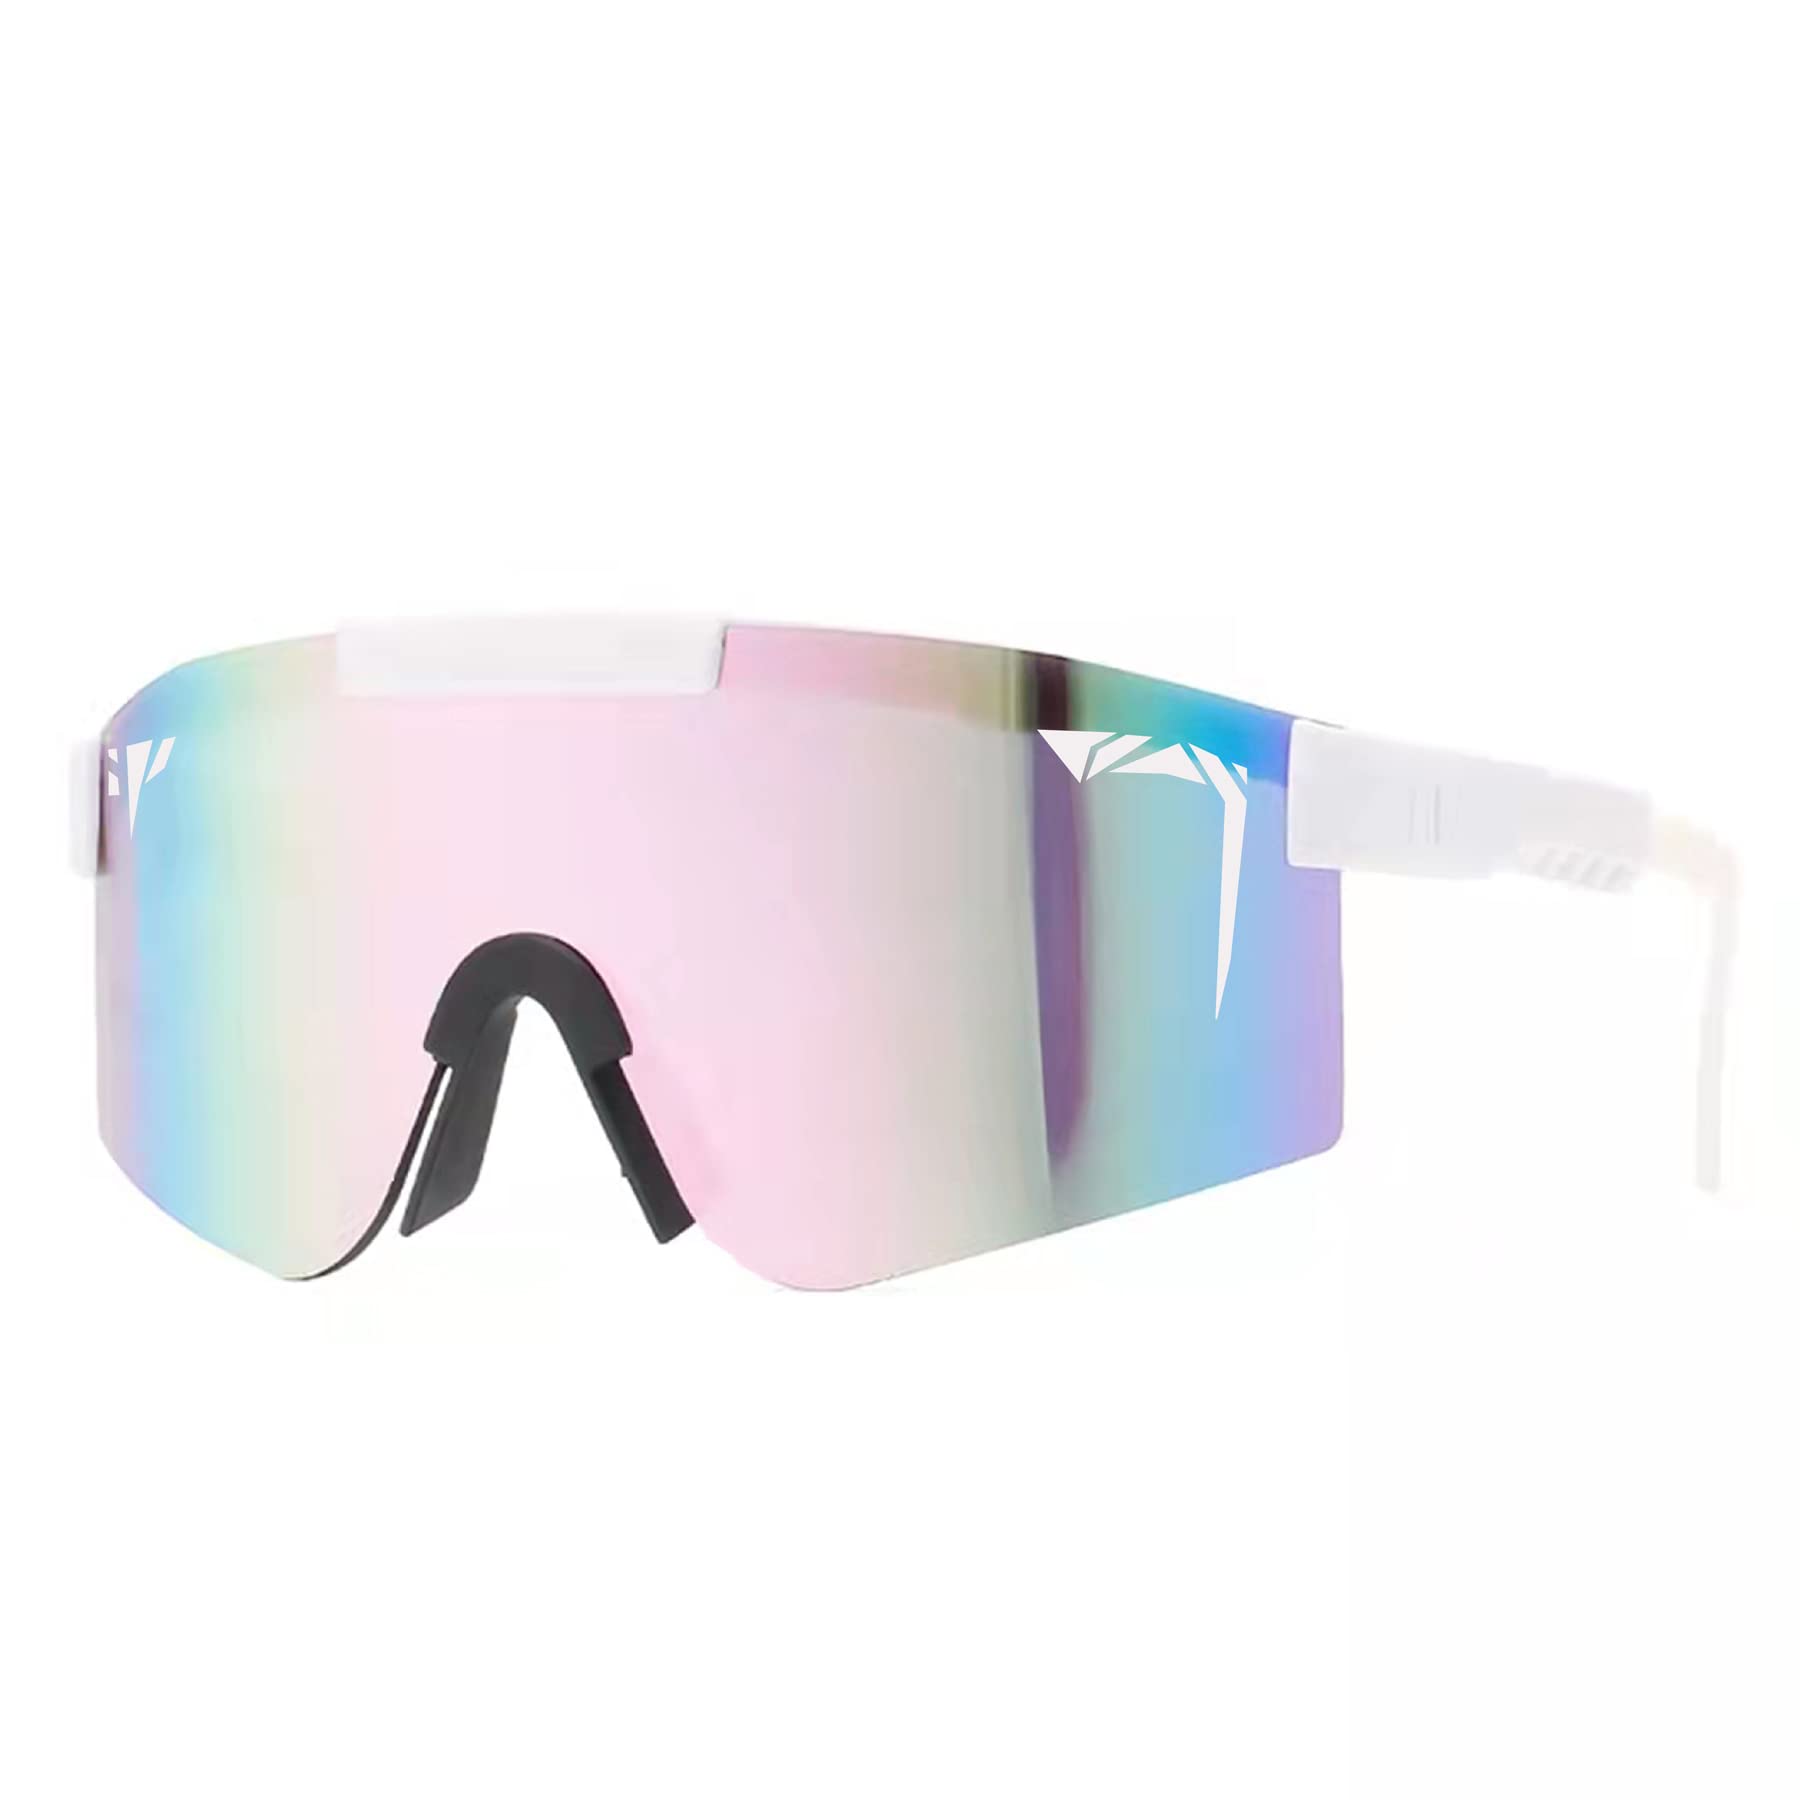 KOUGMCR P-V Sports Polarized Sunglasses for Men Women Frame Cycling Glasses  Sport Sunglasses UV400 Protection Bike Sunglasses